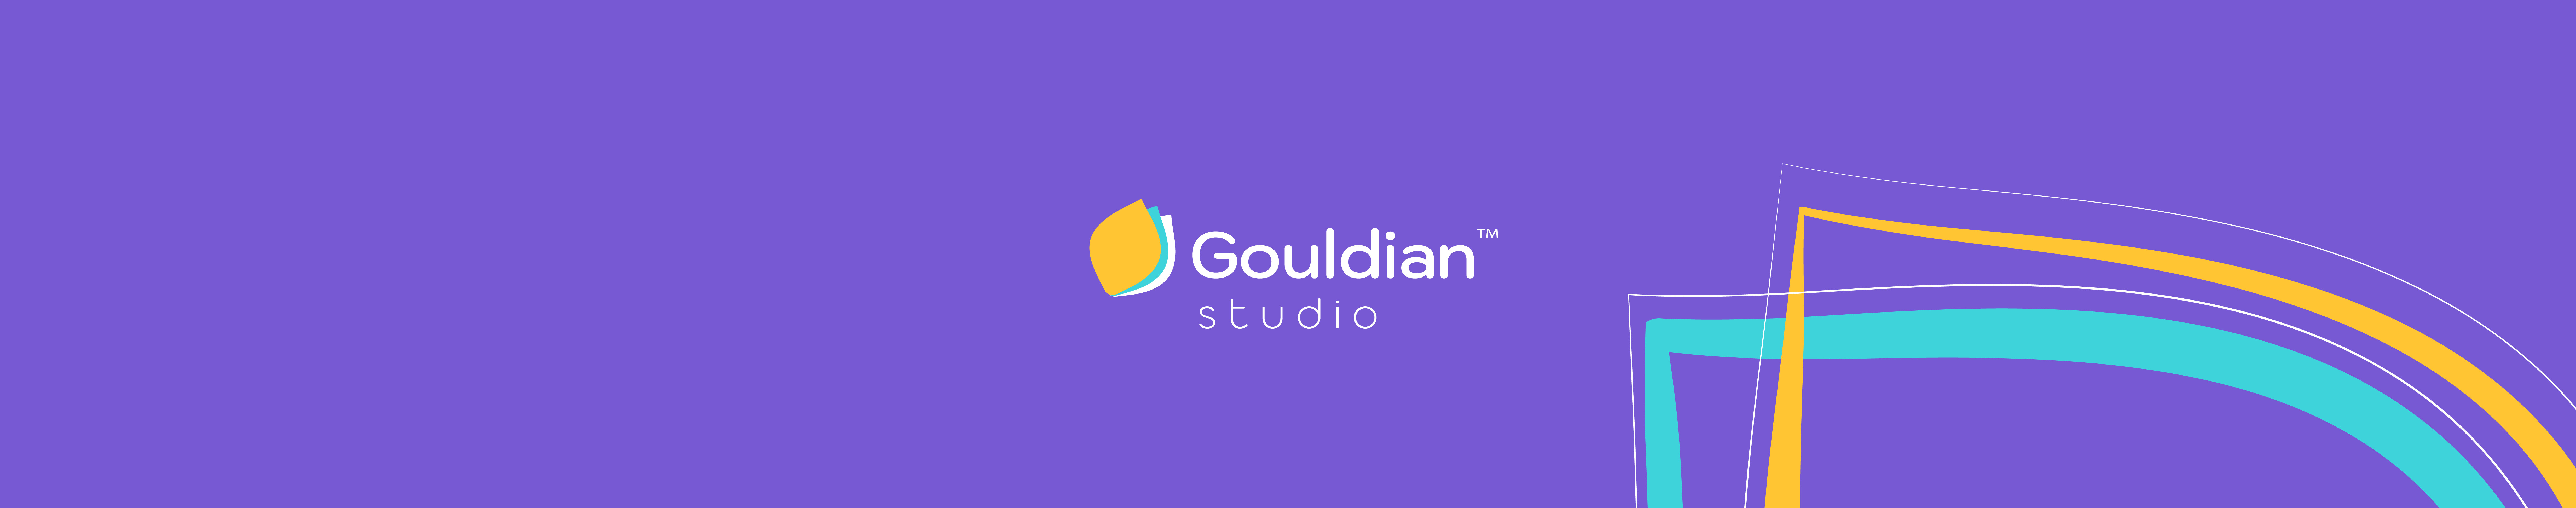 Gouldian studio's profile banner